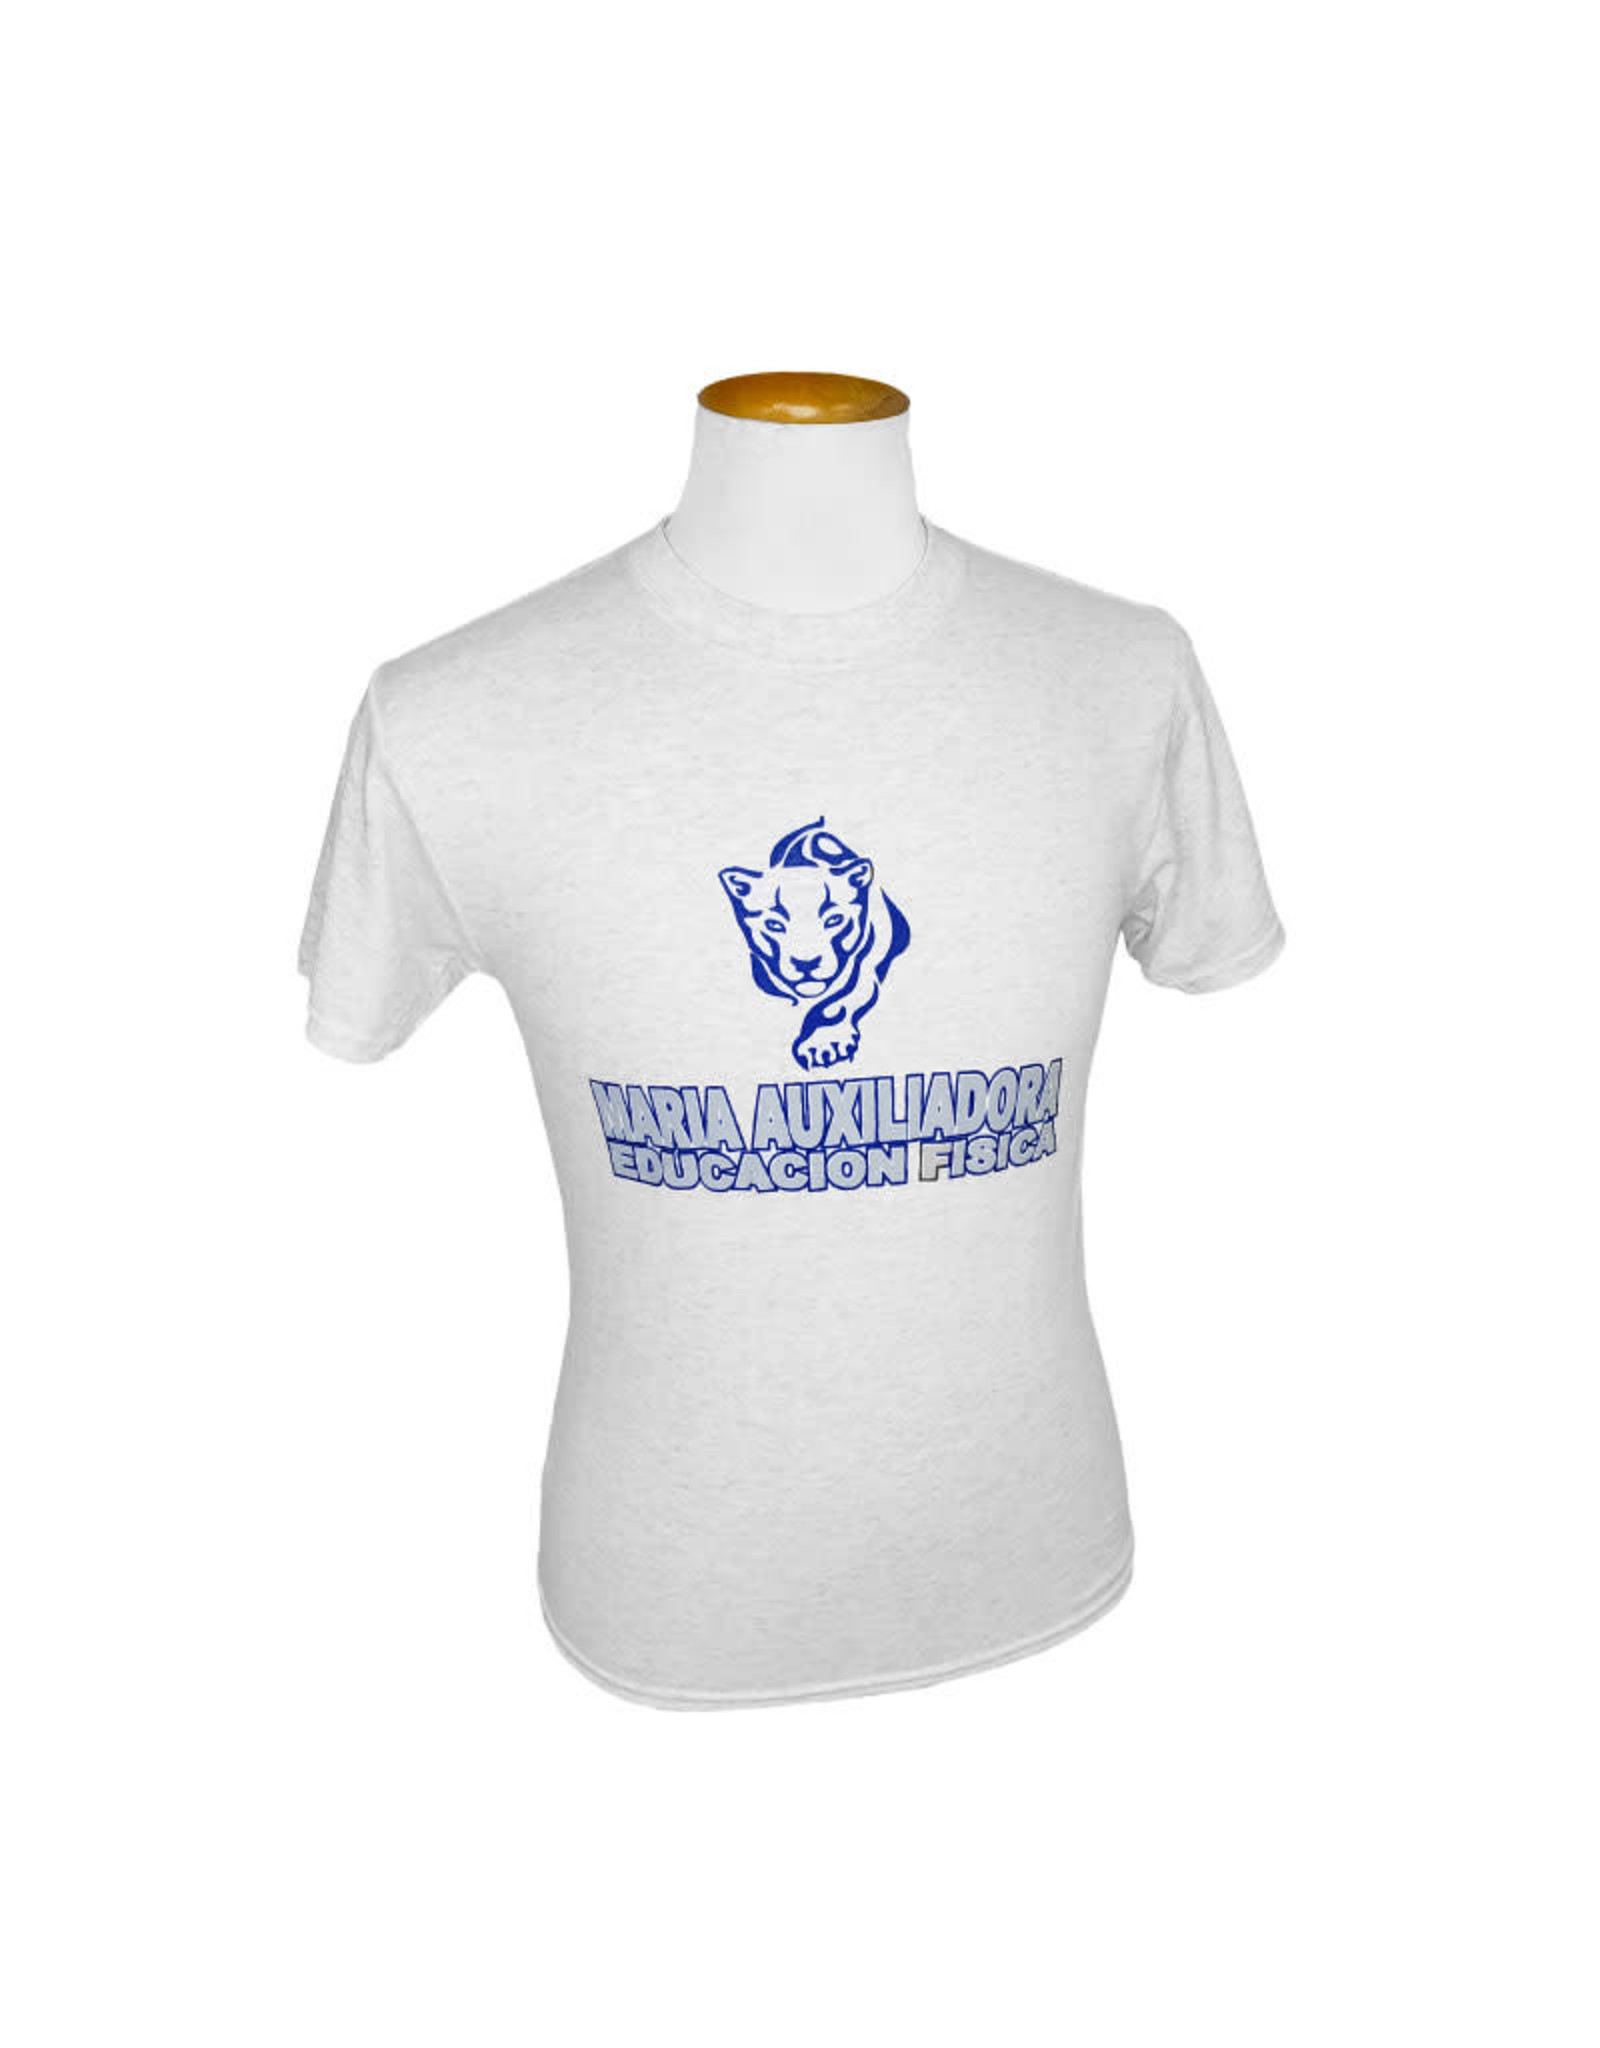 Colegio Maria Auxiliadora T-Shirt | Educacion Fisica | Col. Maria Auxiliadora